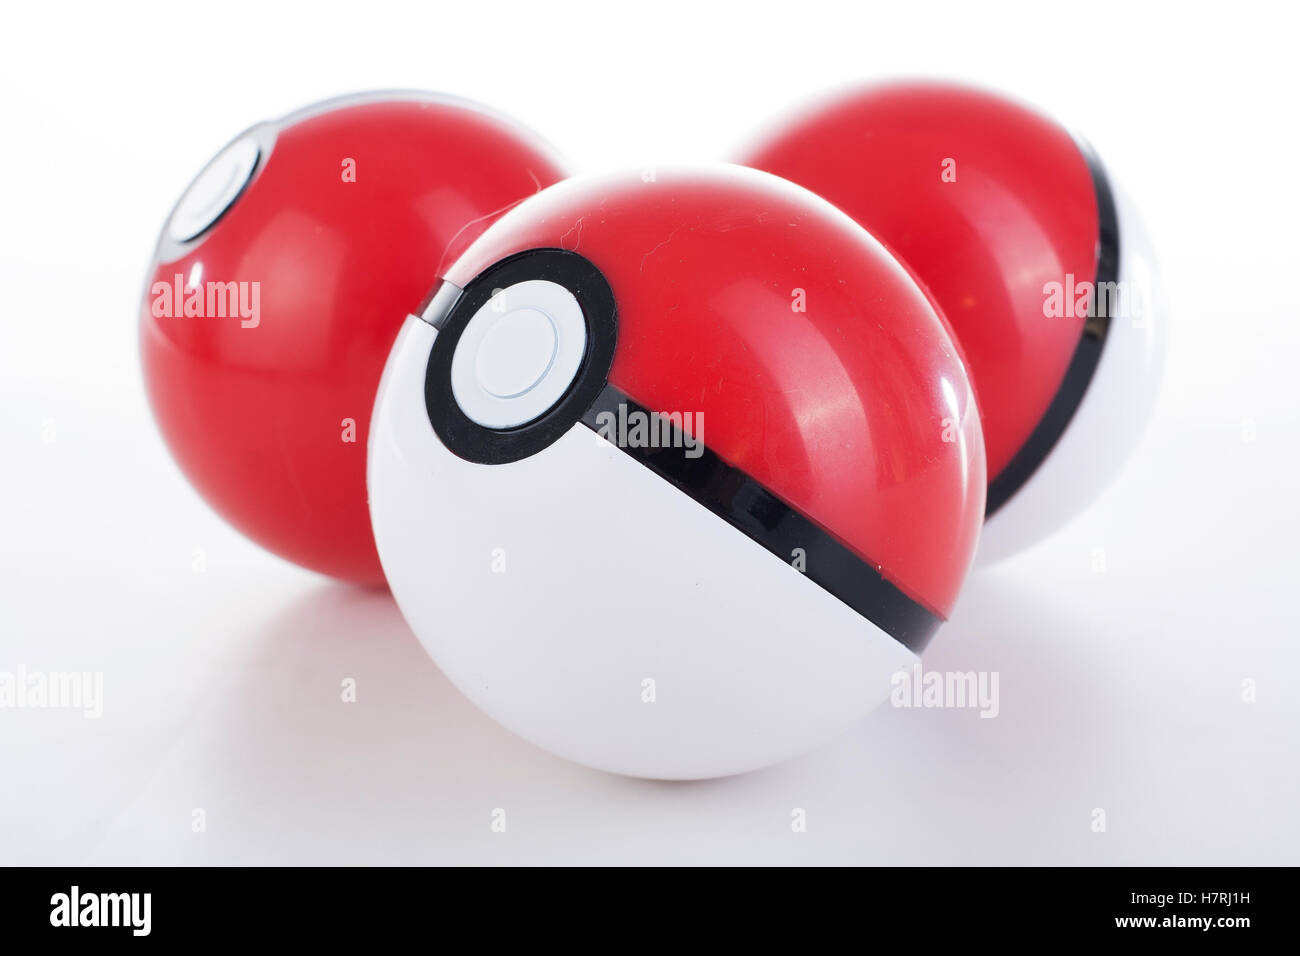 https://c8.alamy.com/comp/H7RJ1H/pokemon-ball-pokeball-on-white-studio-background-red-and-white-poke-H7RJ1H.jpg